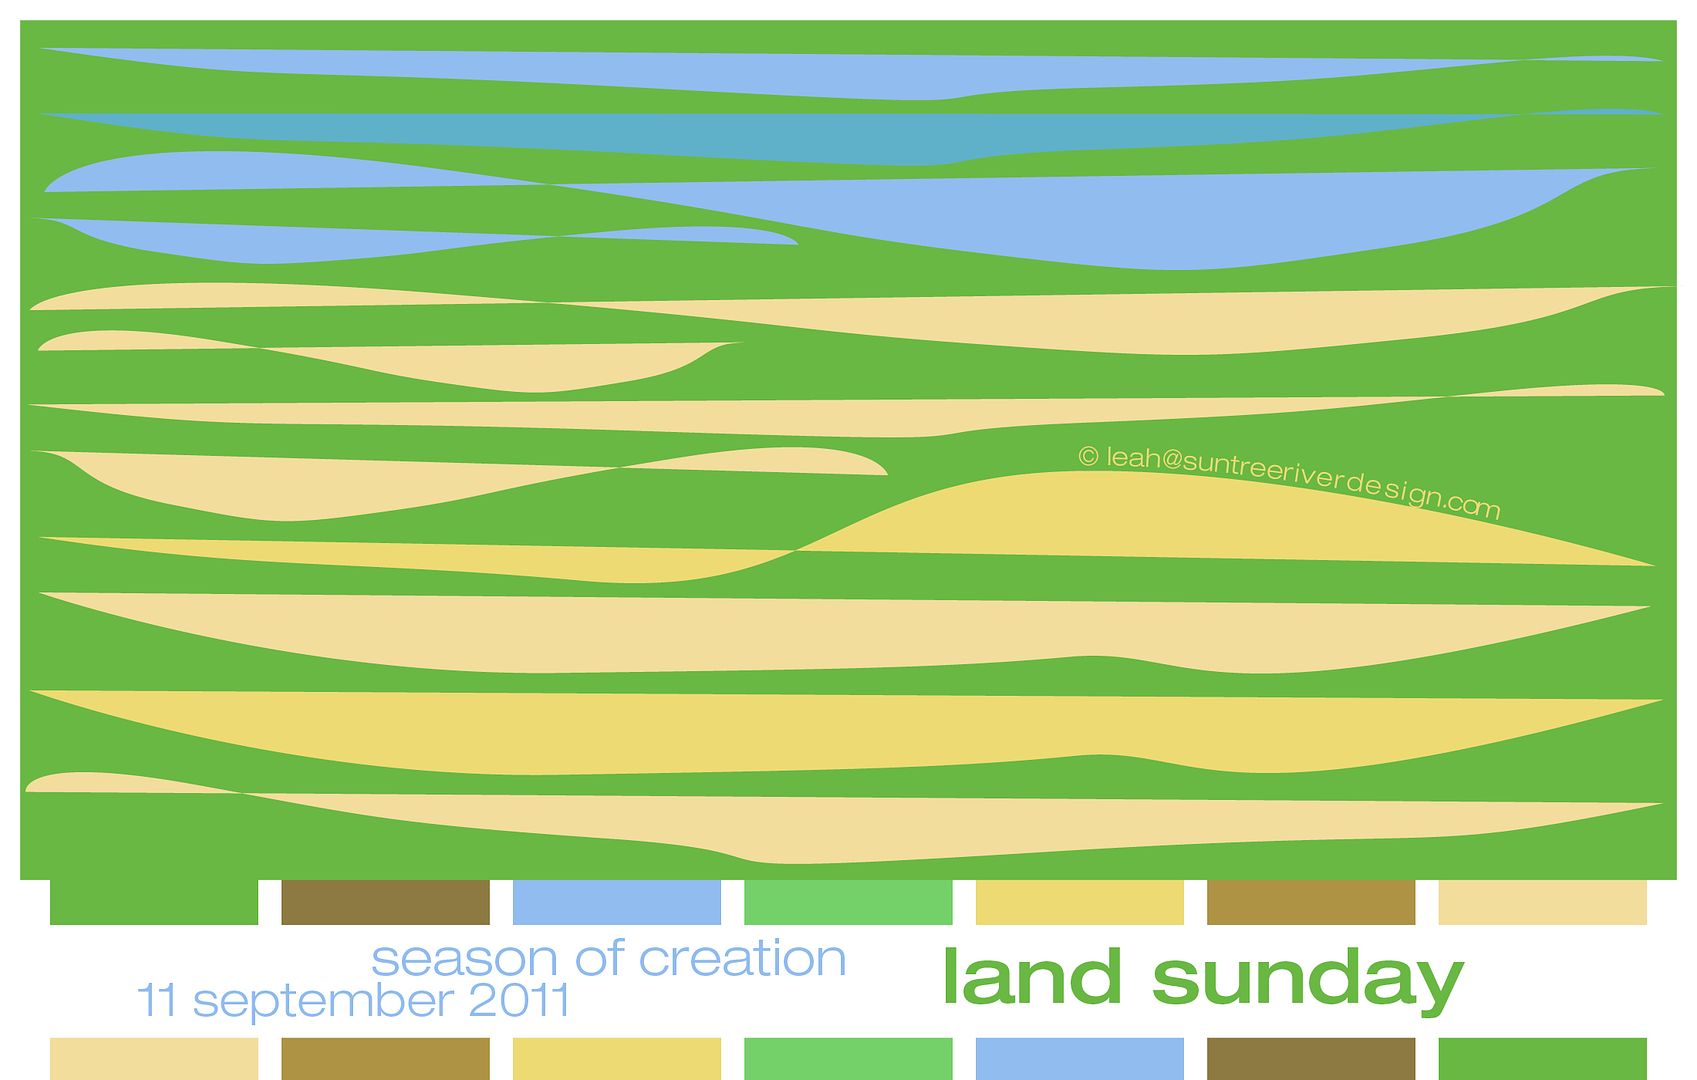 season of creation 2, land